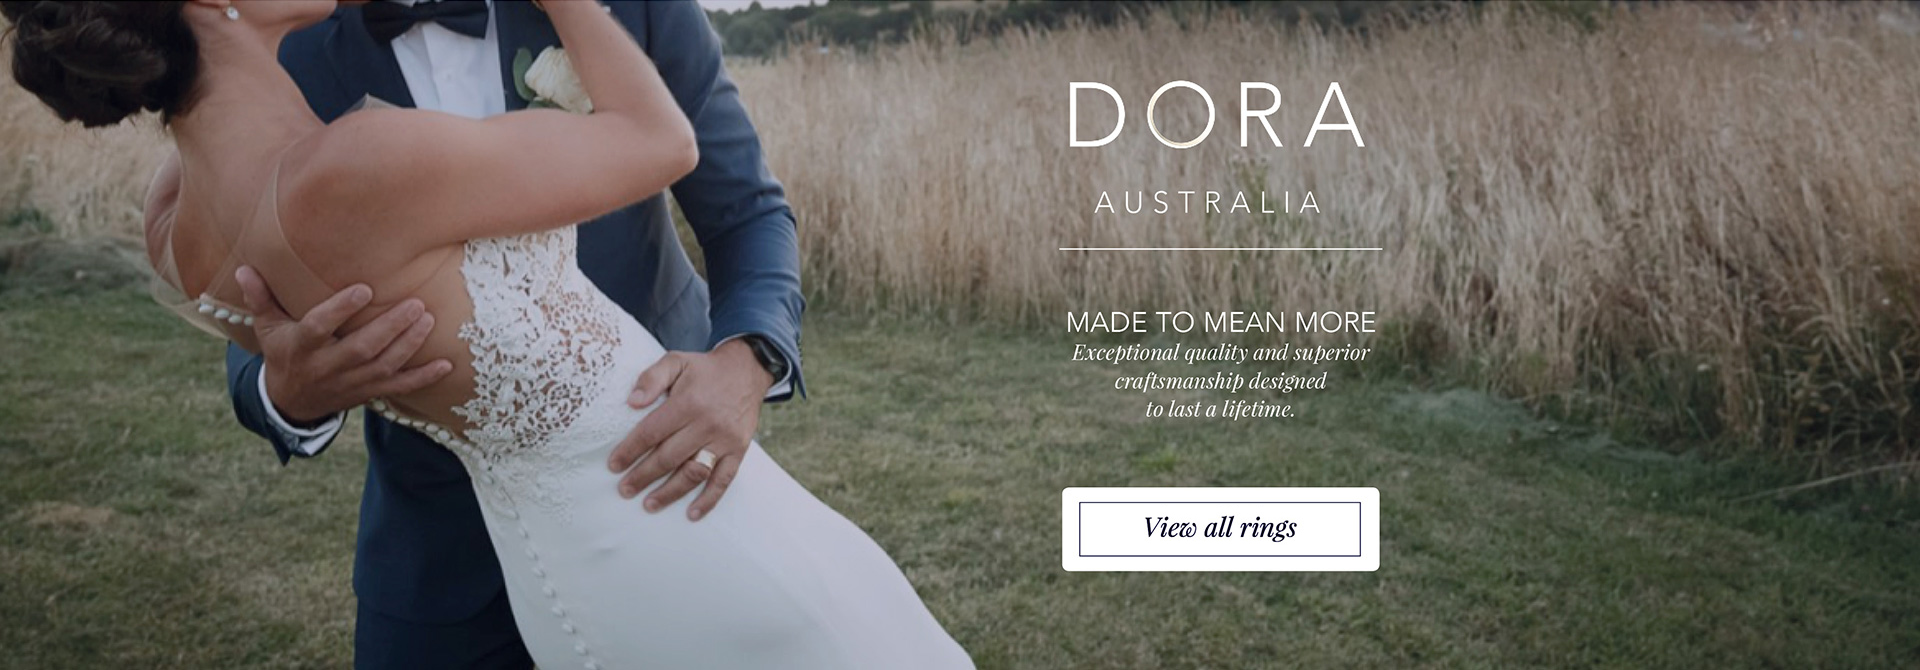 Dora Australia Rings. Made to mean more